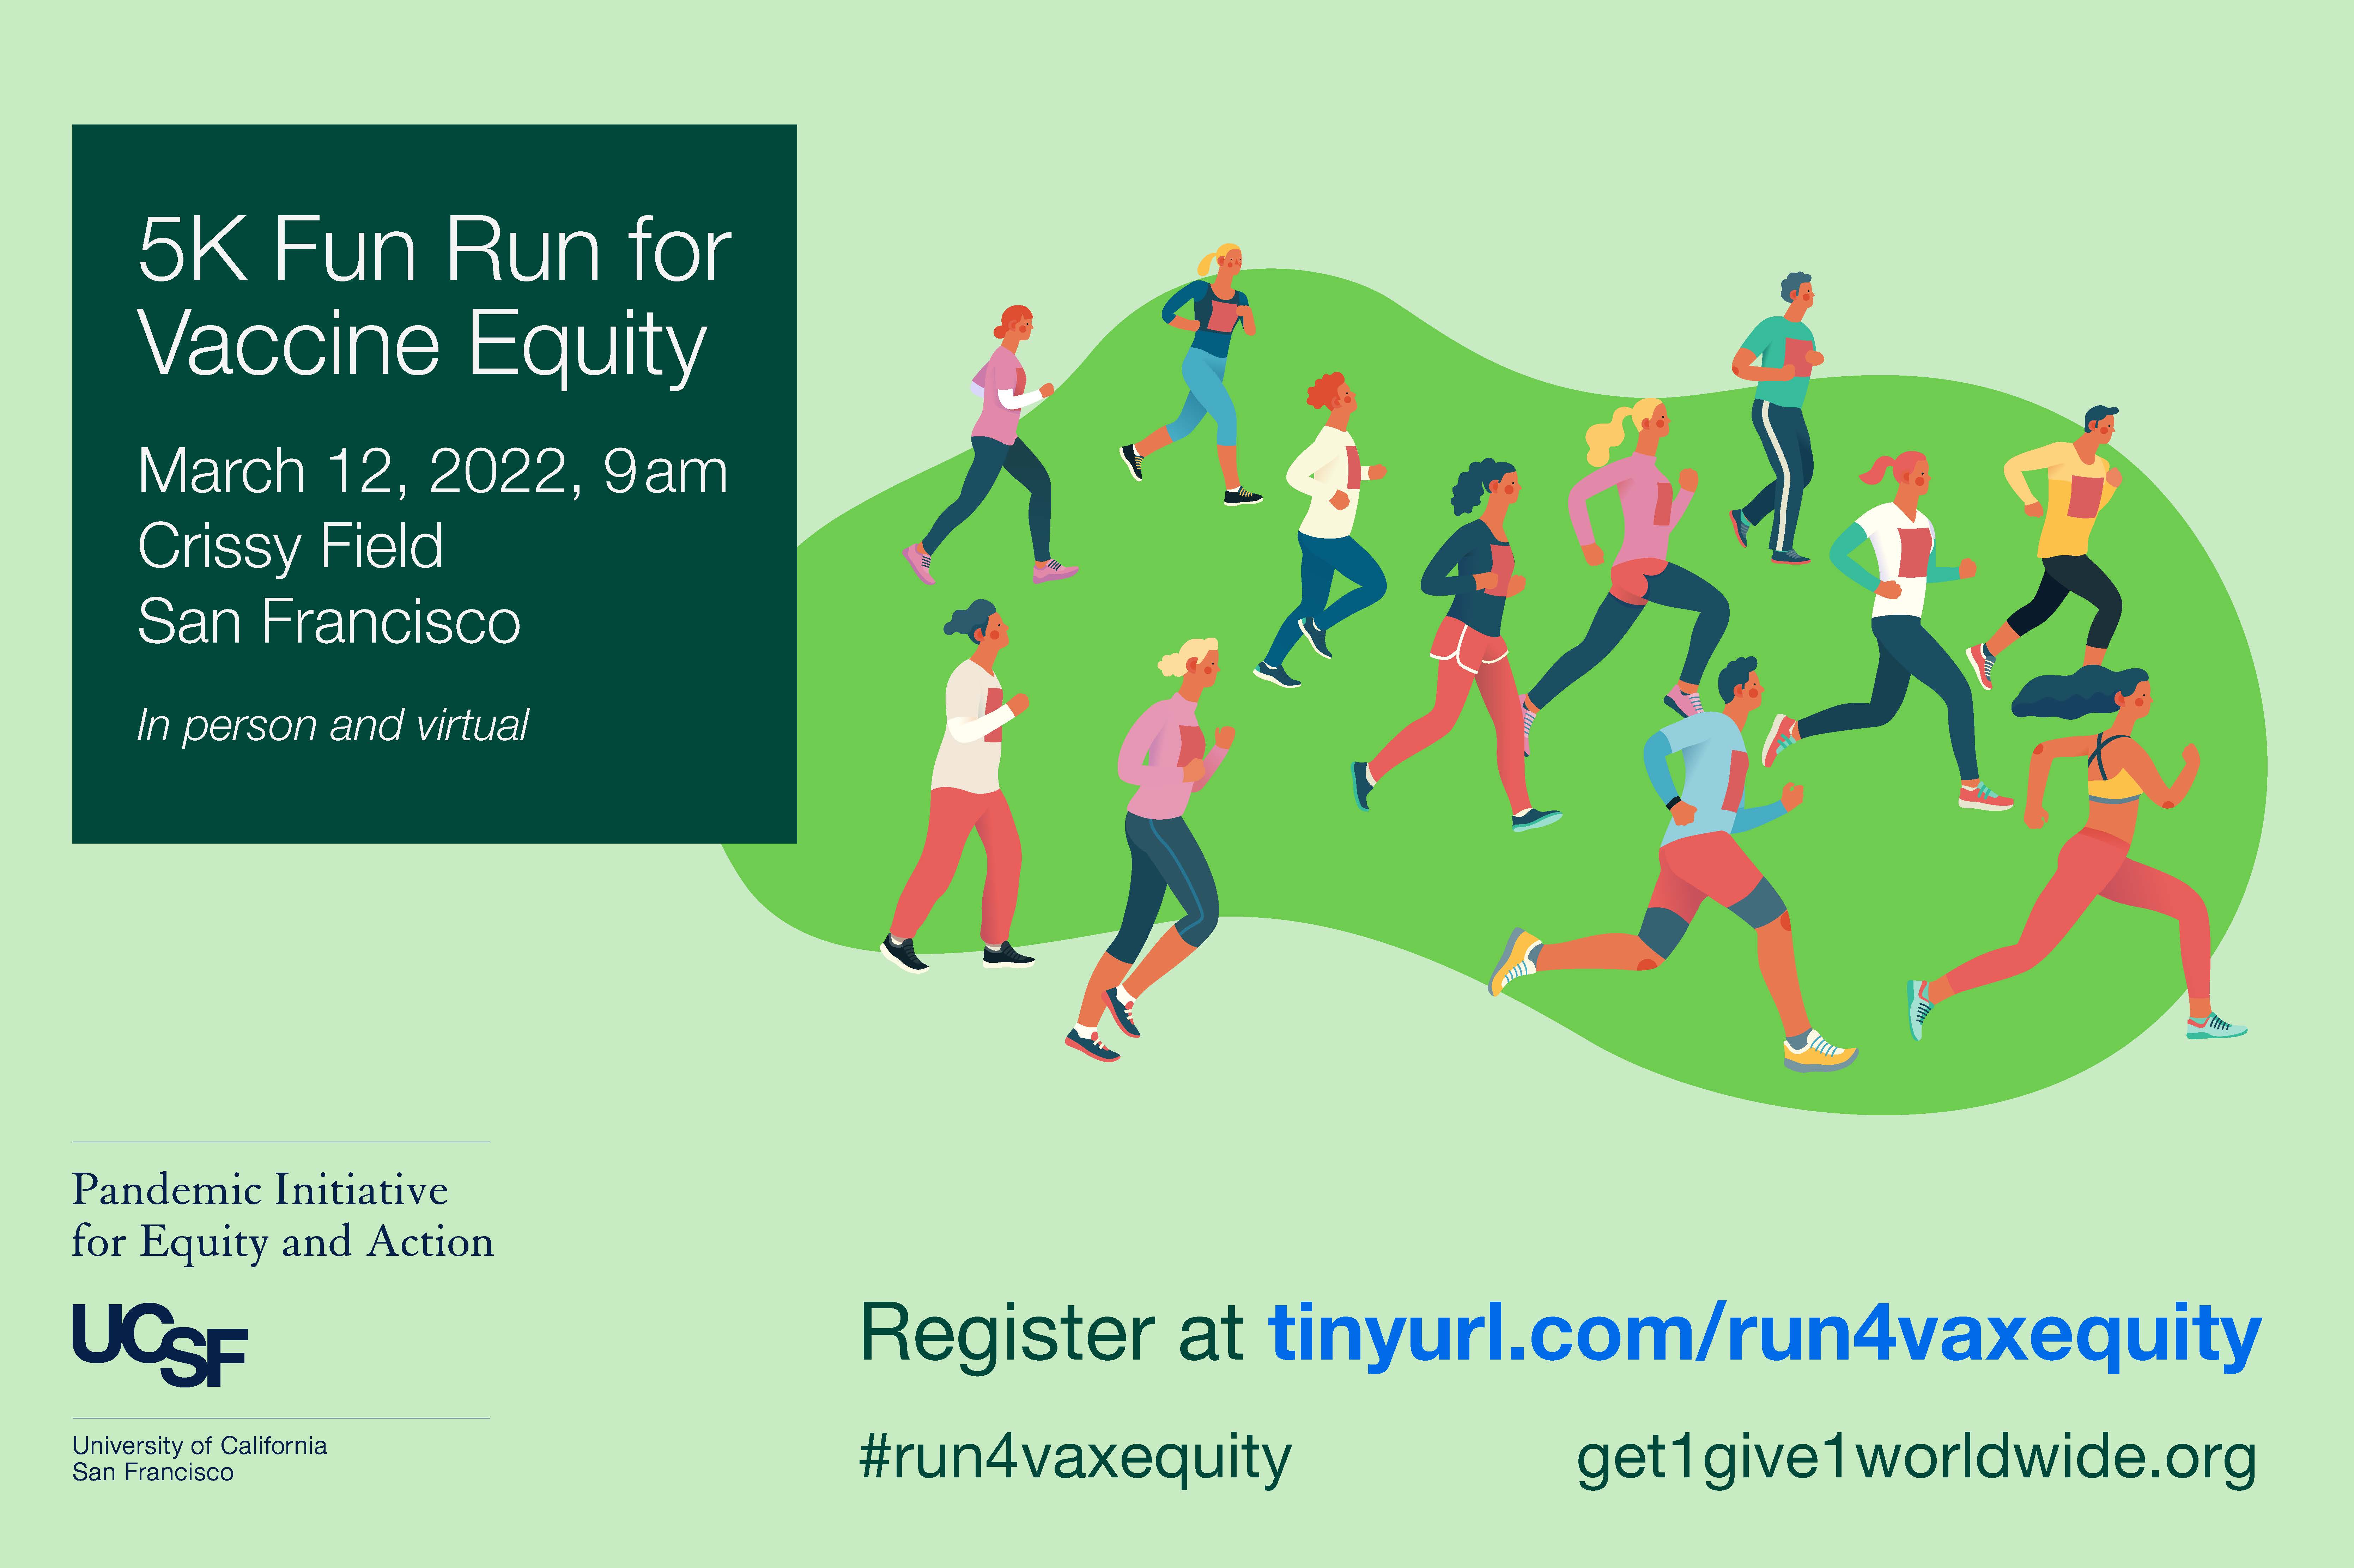 5k fun run for vaccine equity